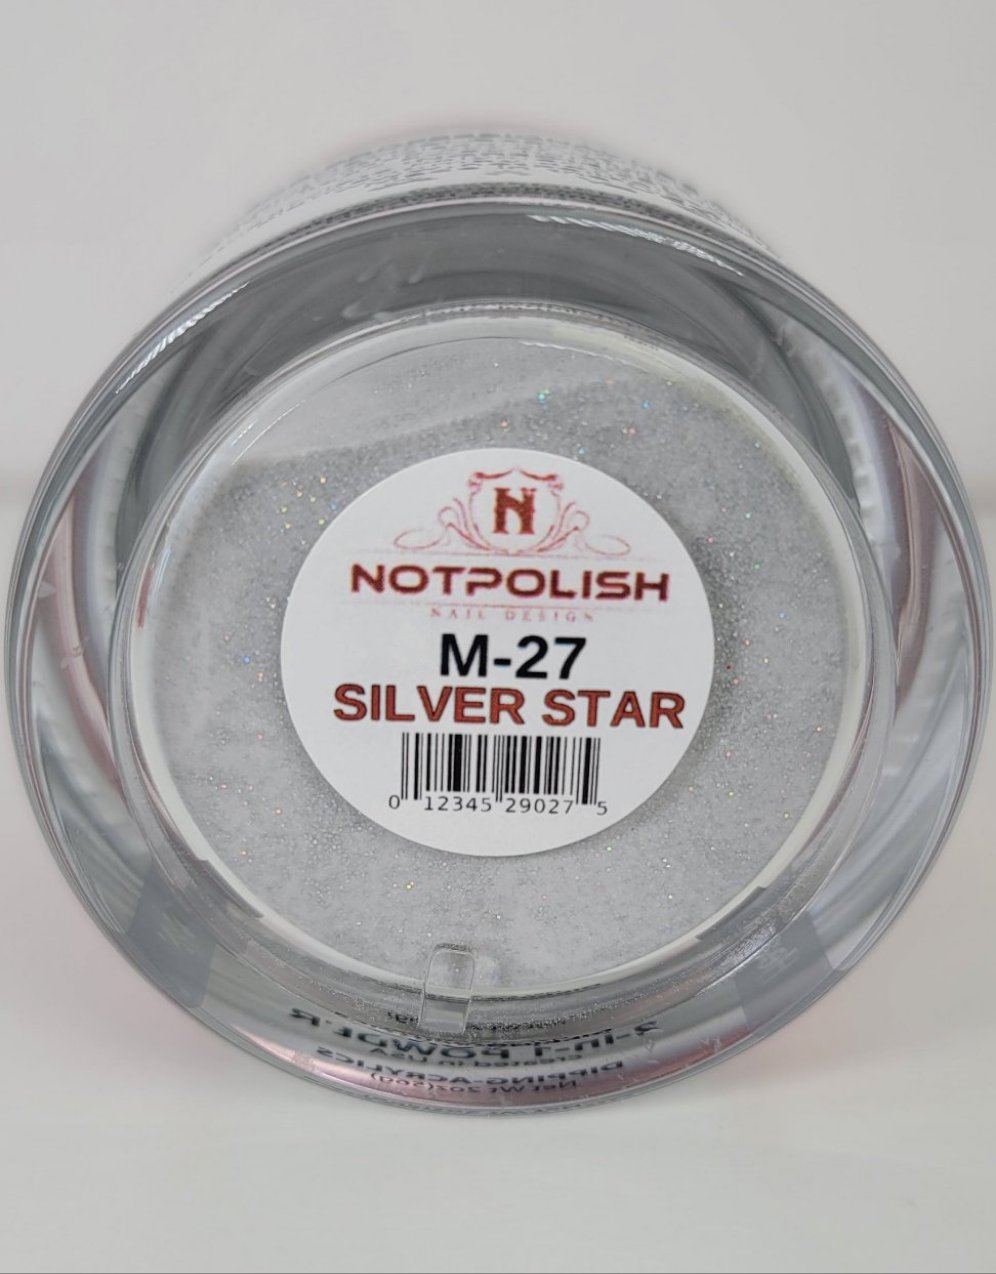 Not polish powder M-27